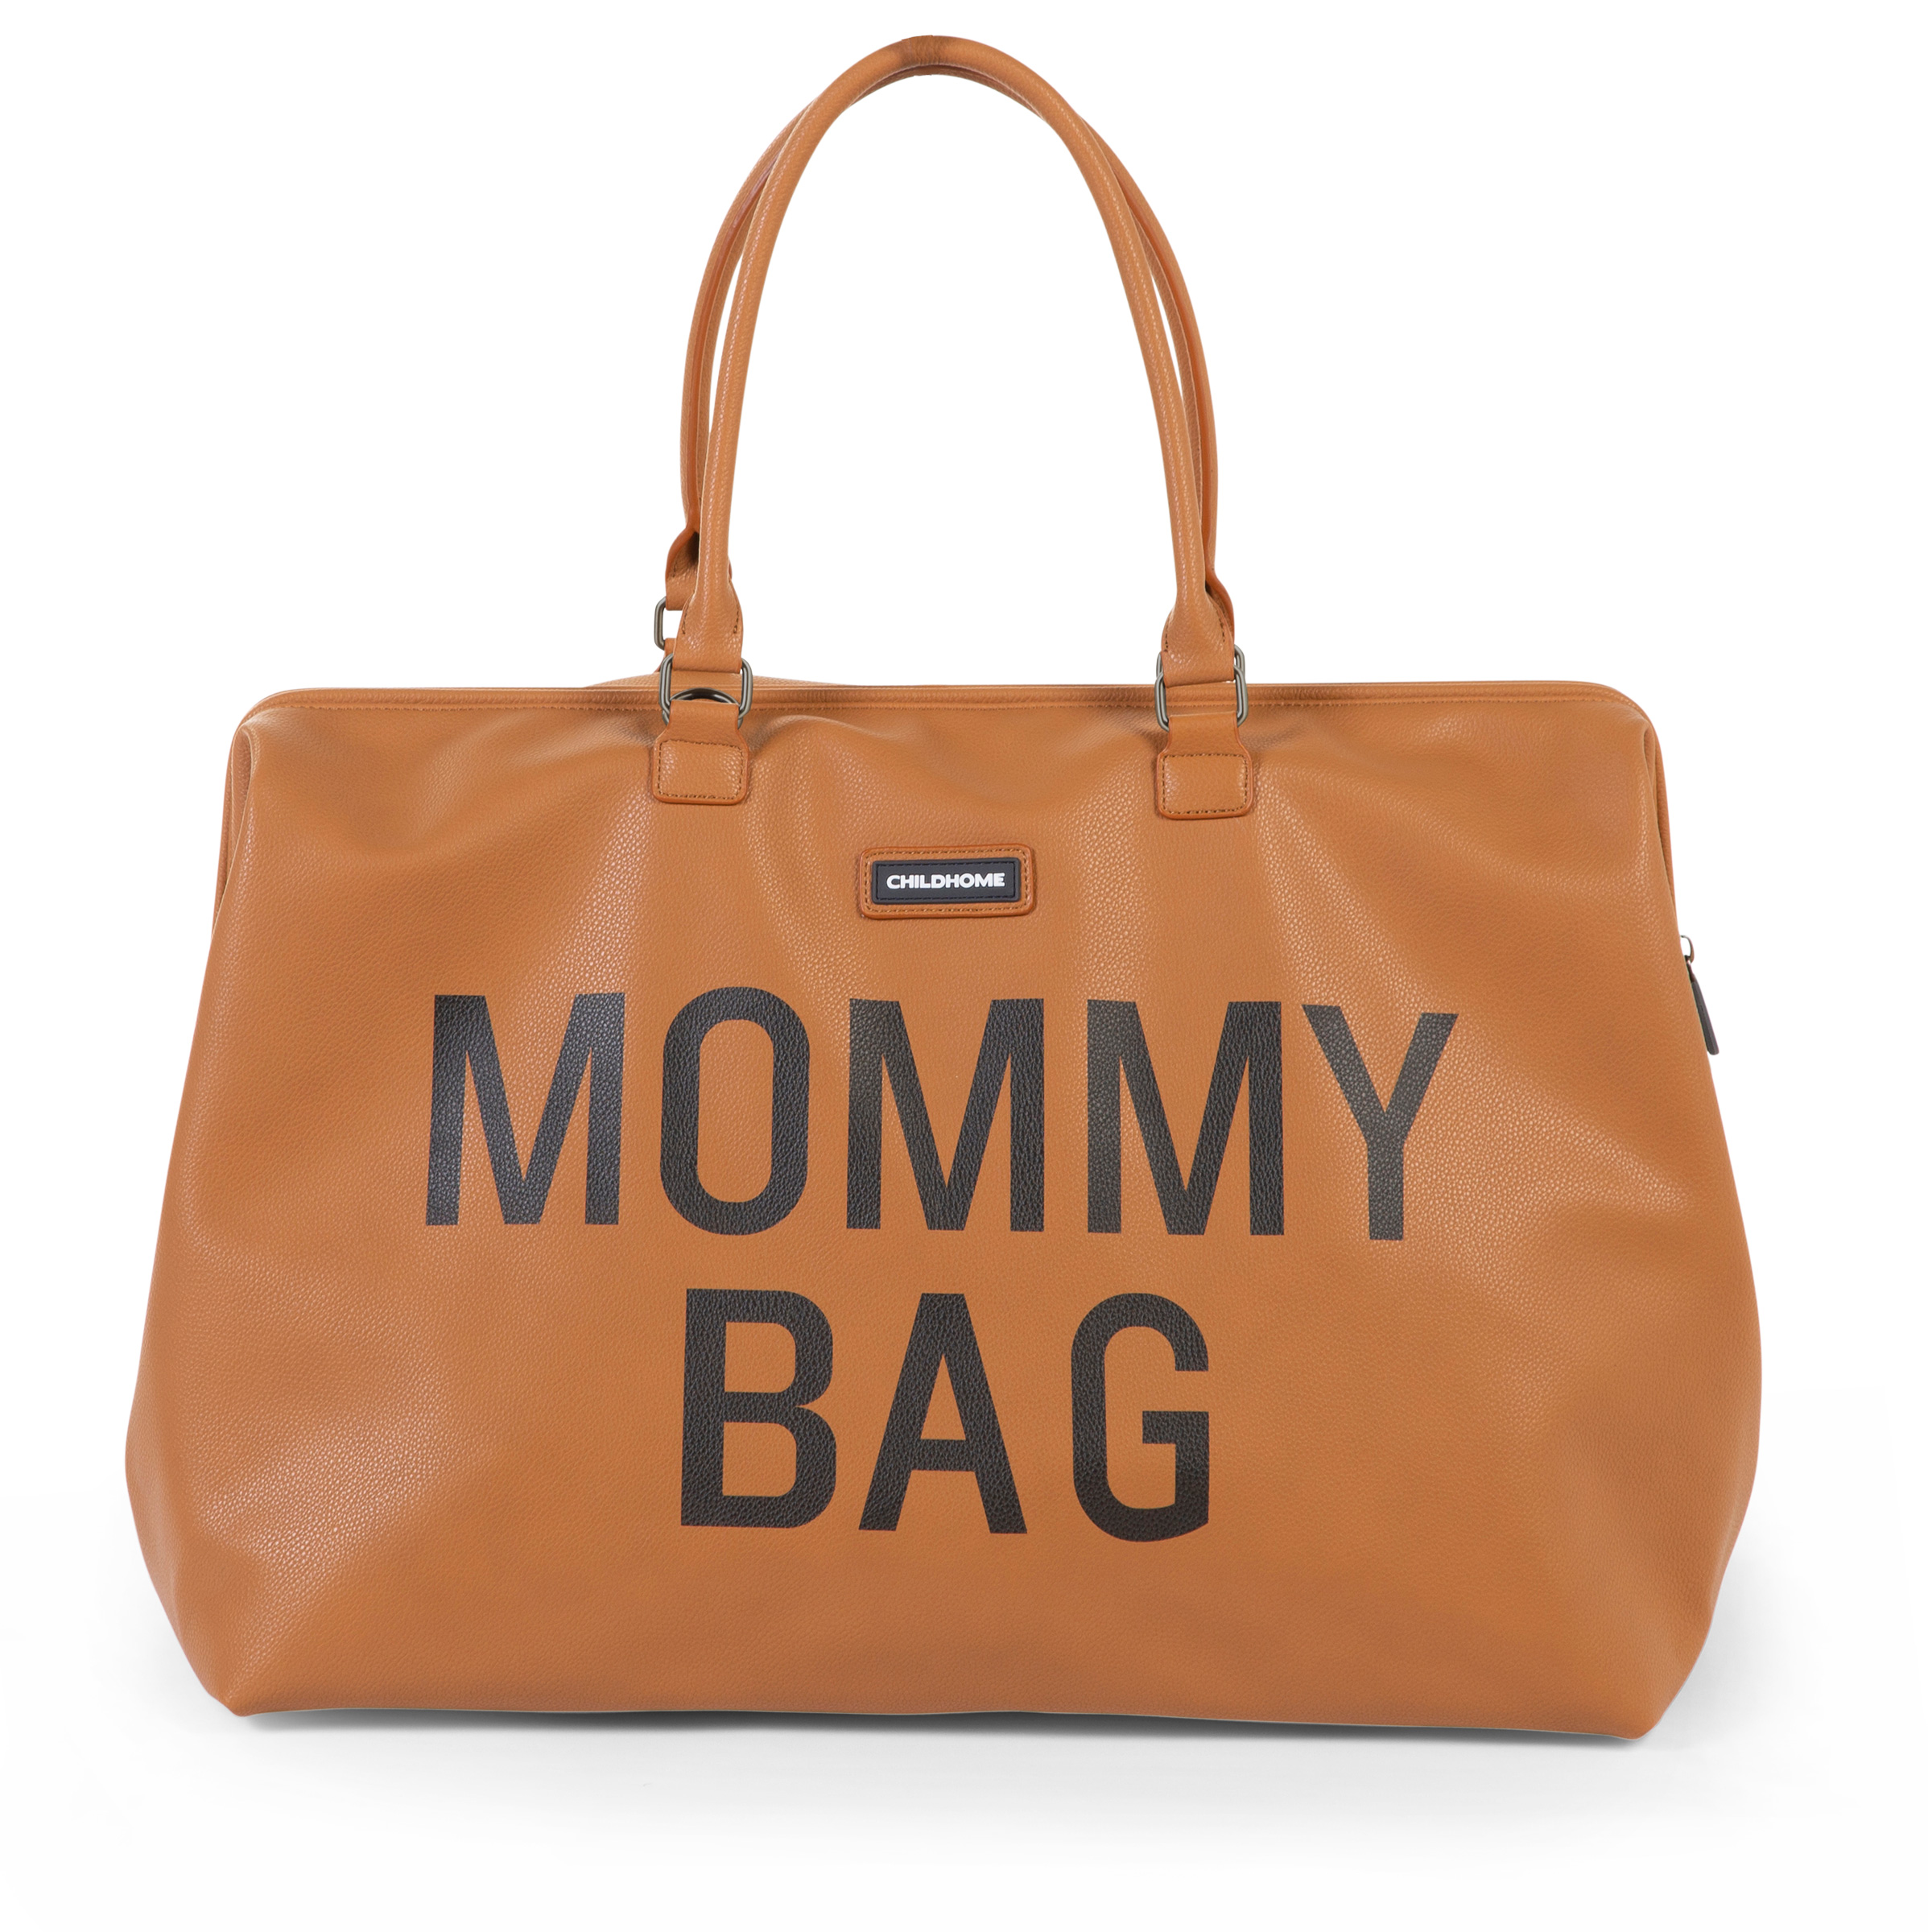 Mommy Bag ® Sac A Langer - Look Cuir Brun